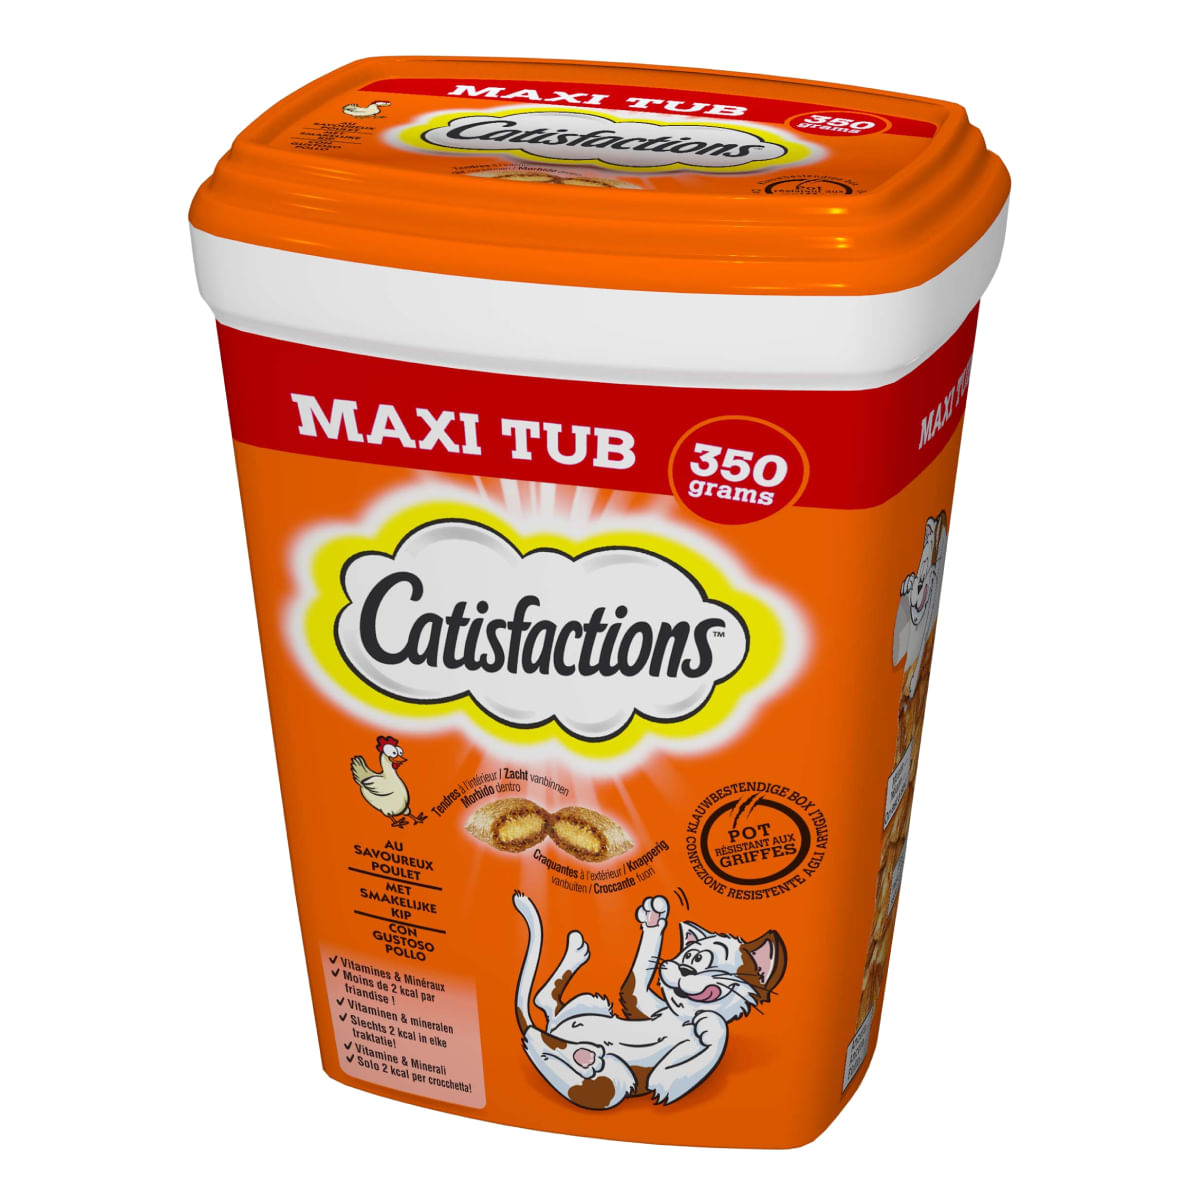 4x Catisfactions Maxi Tub con Pollo 350gr